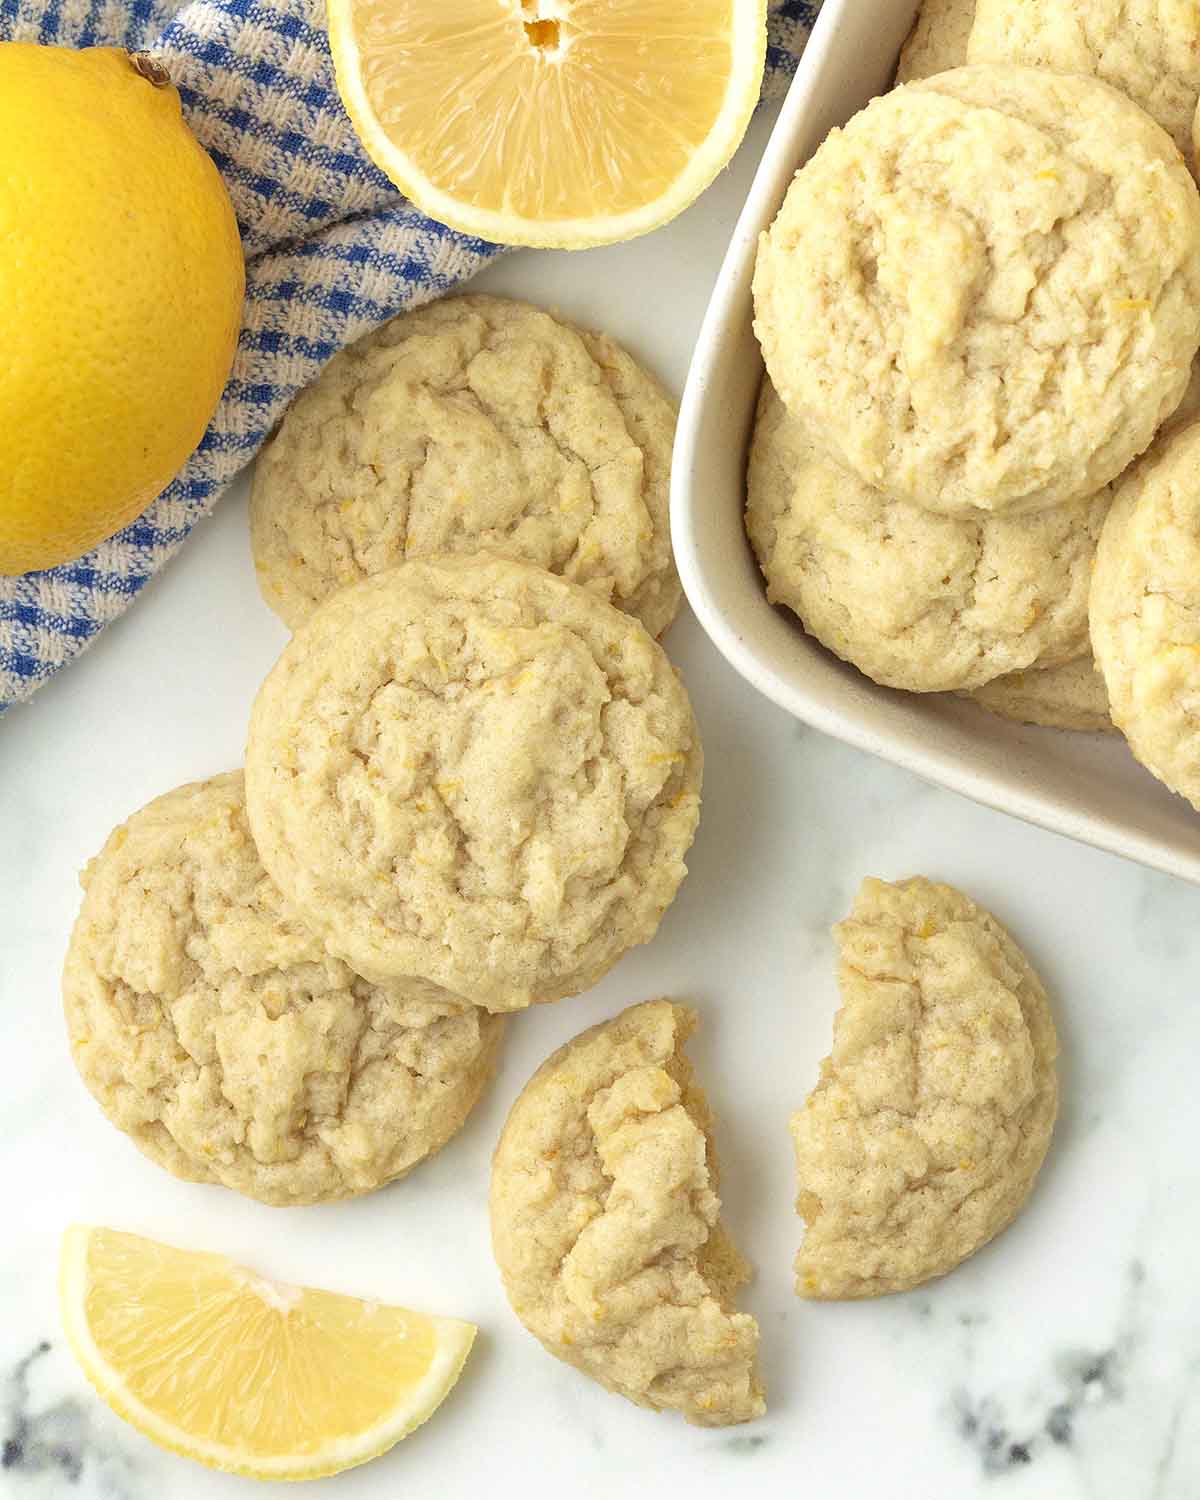 An overhead image showing lemon cookies and fresh lemons on a table, one cookie is broken in half.